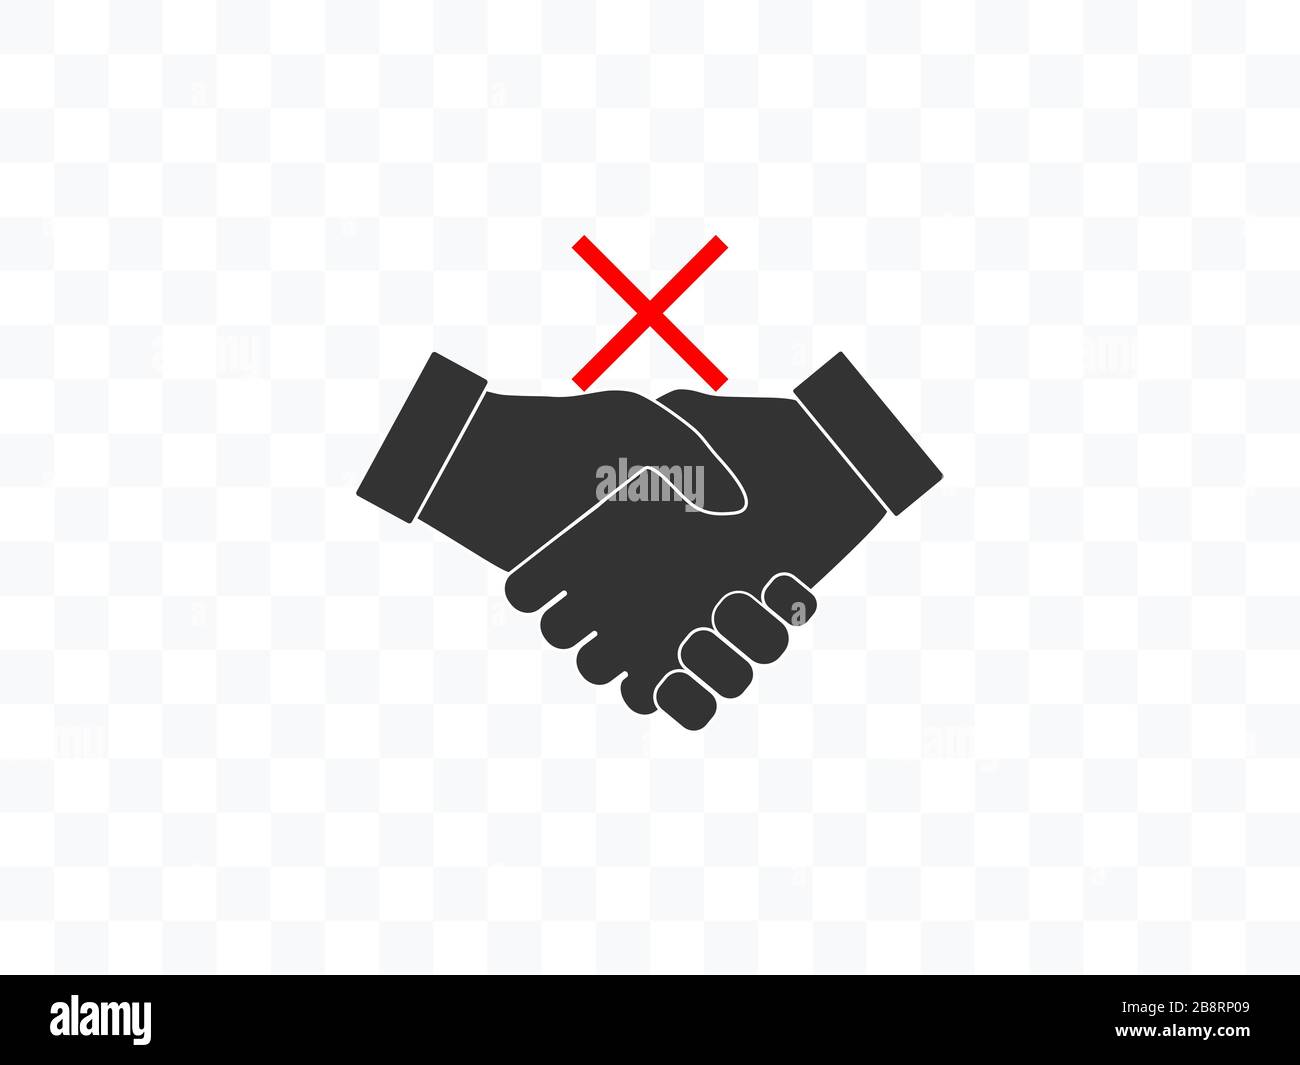 No handshake icon. Vector illustration, flat design. Stock Vector